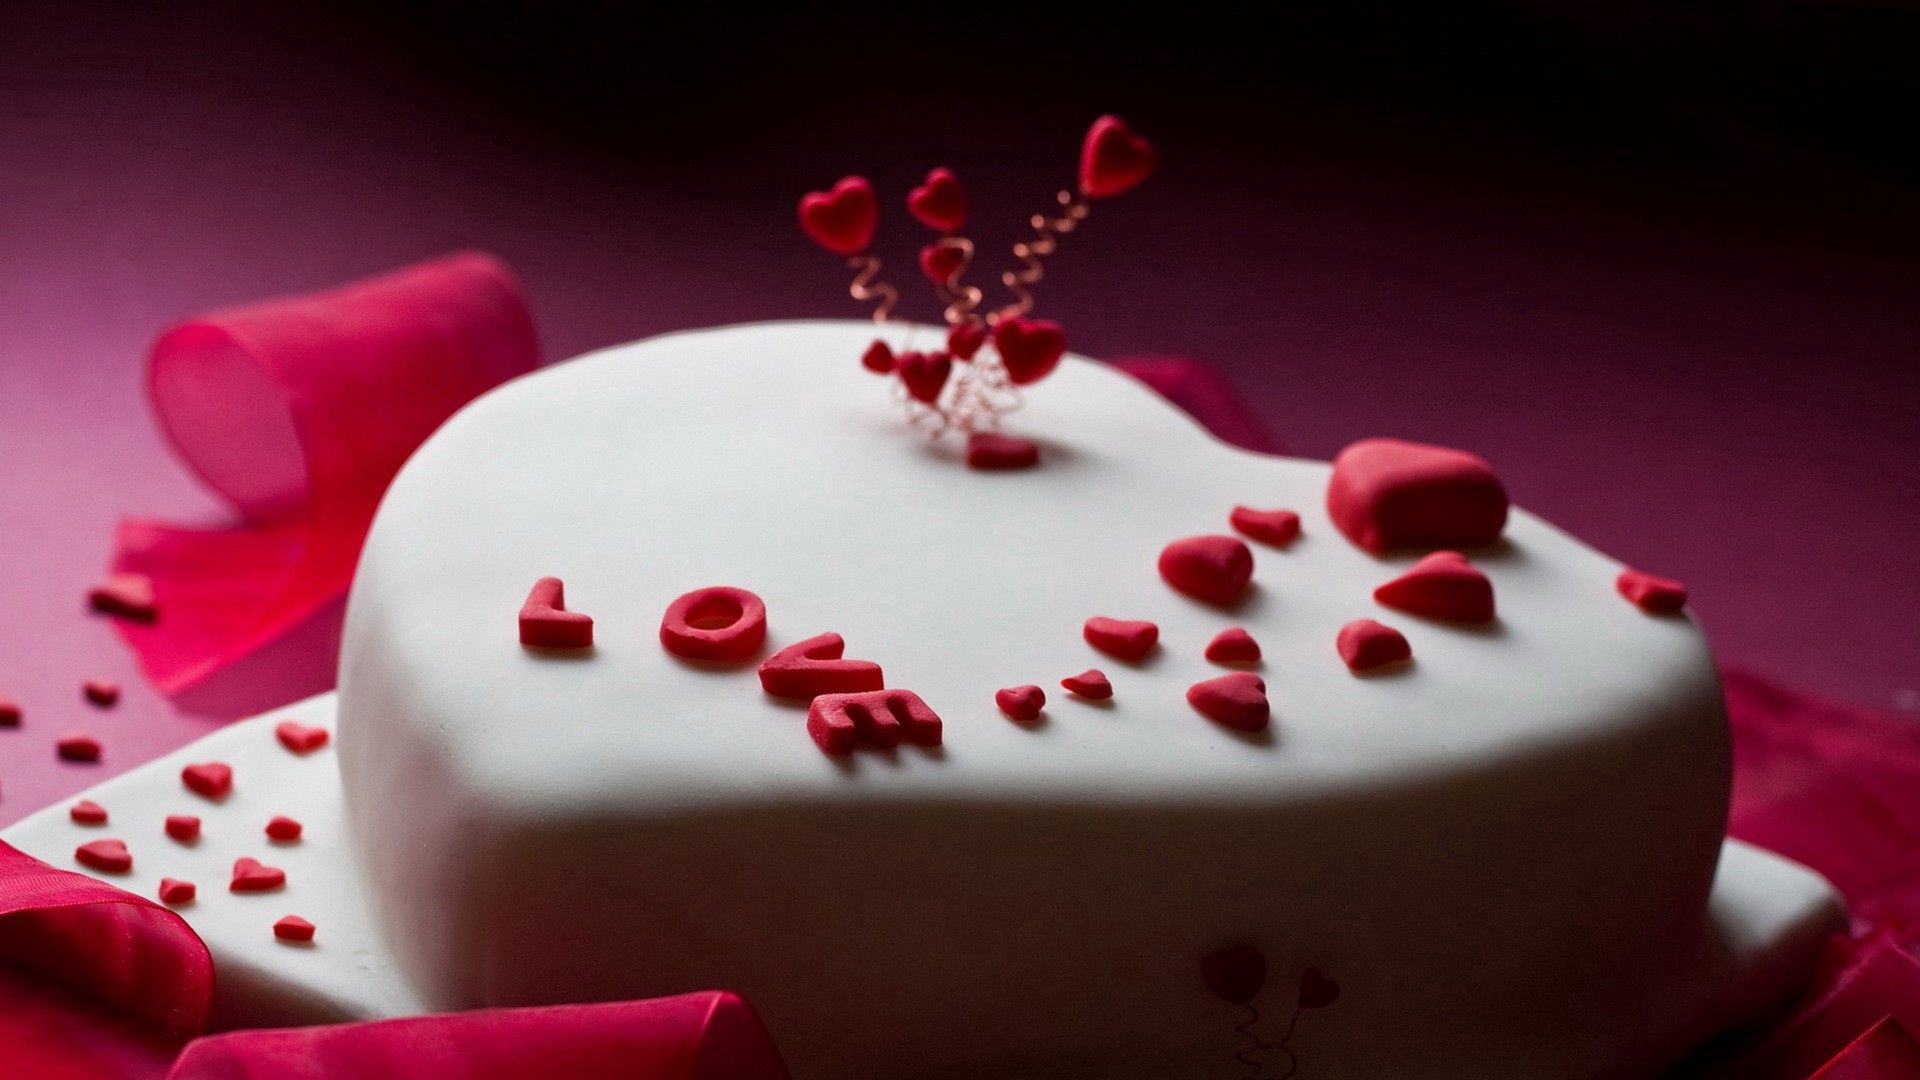 Cakes - Free images on Pixabay - 2 | Happy birthday cake images, Birthday  cake with candles, Happy birthday cakes